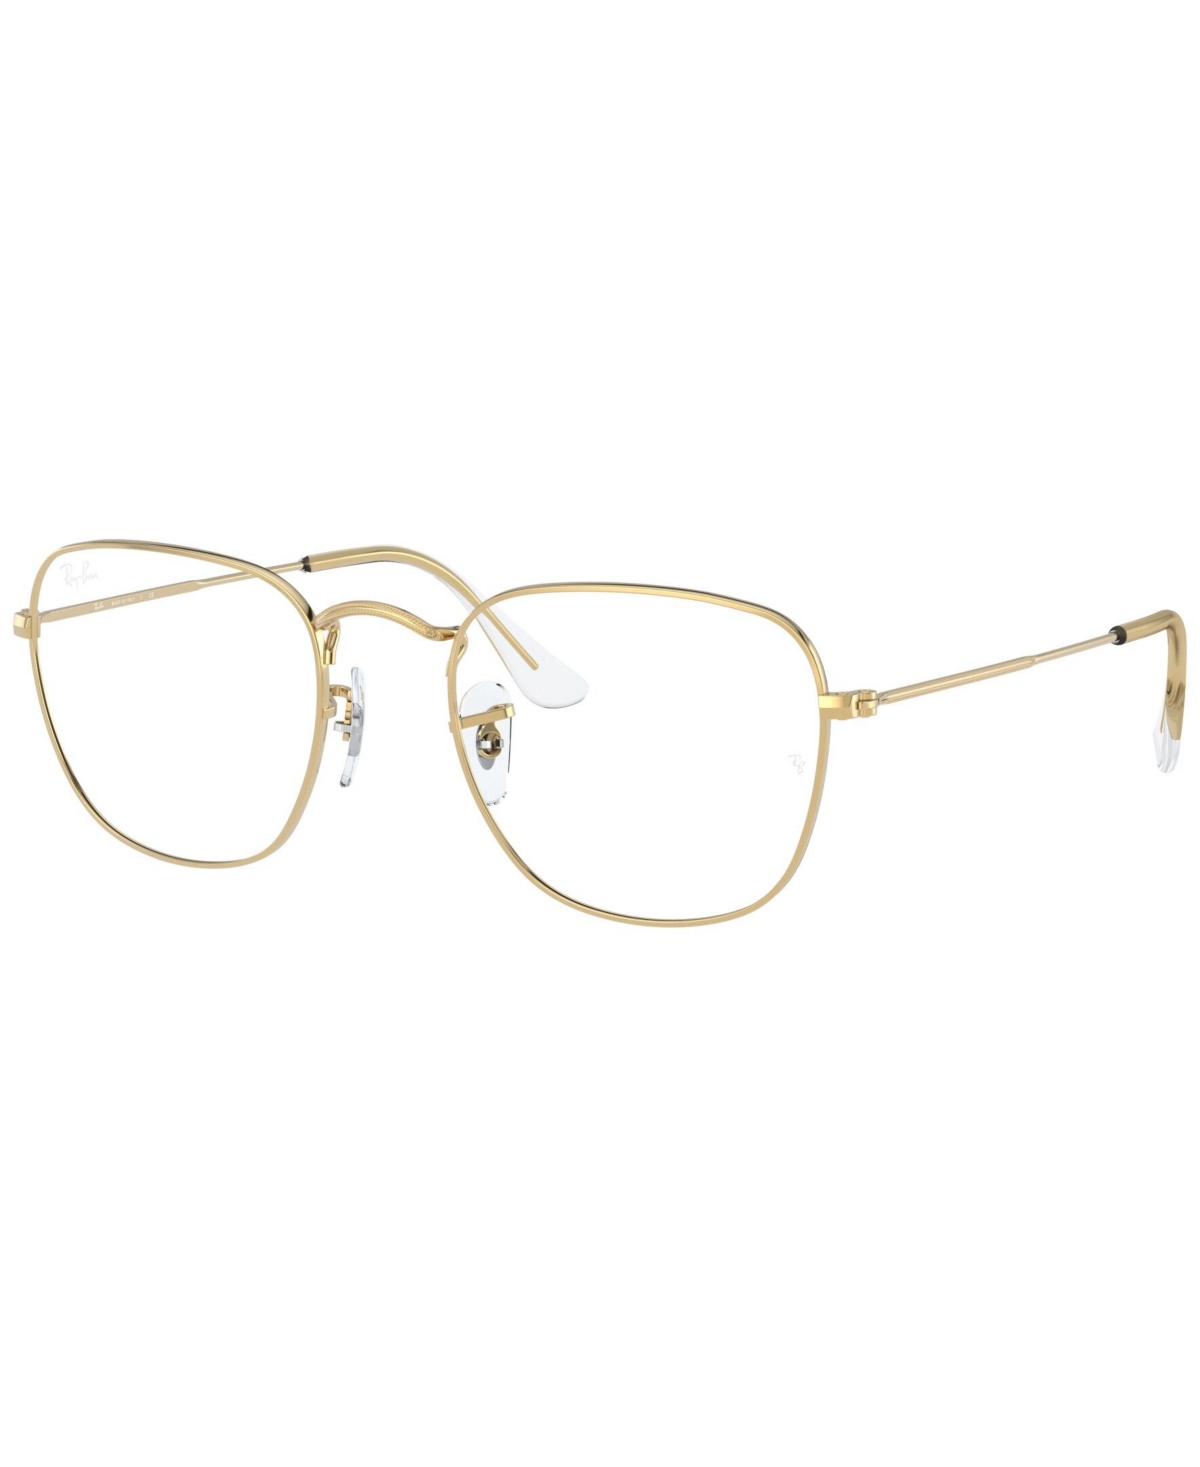 RX3857V Unisex Square Eyeglasses - Gold-Tone